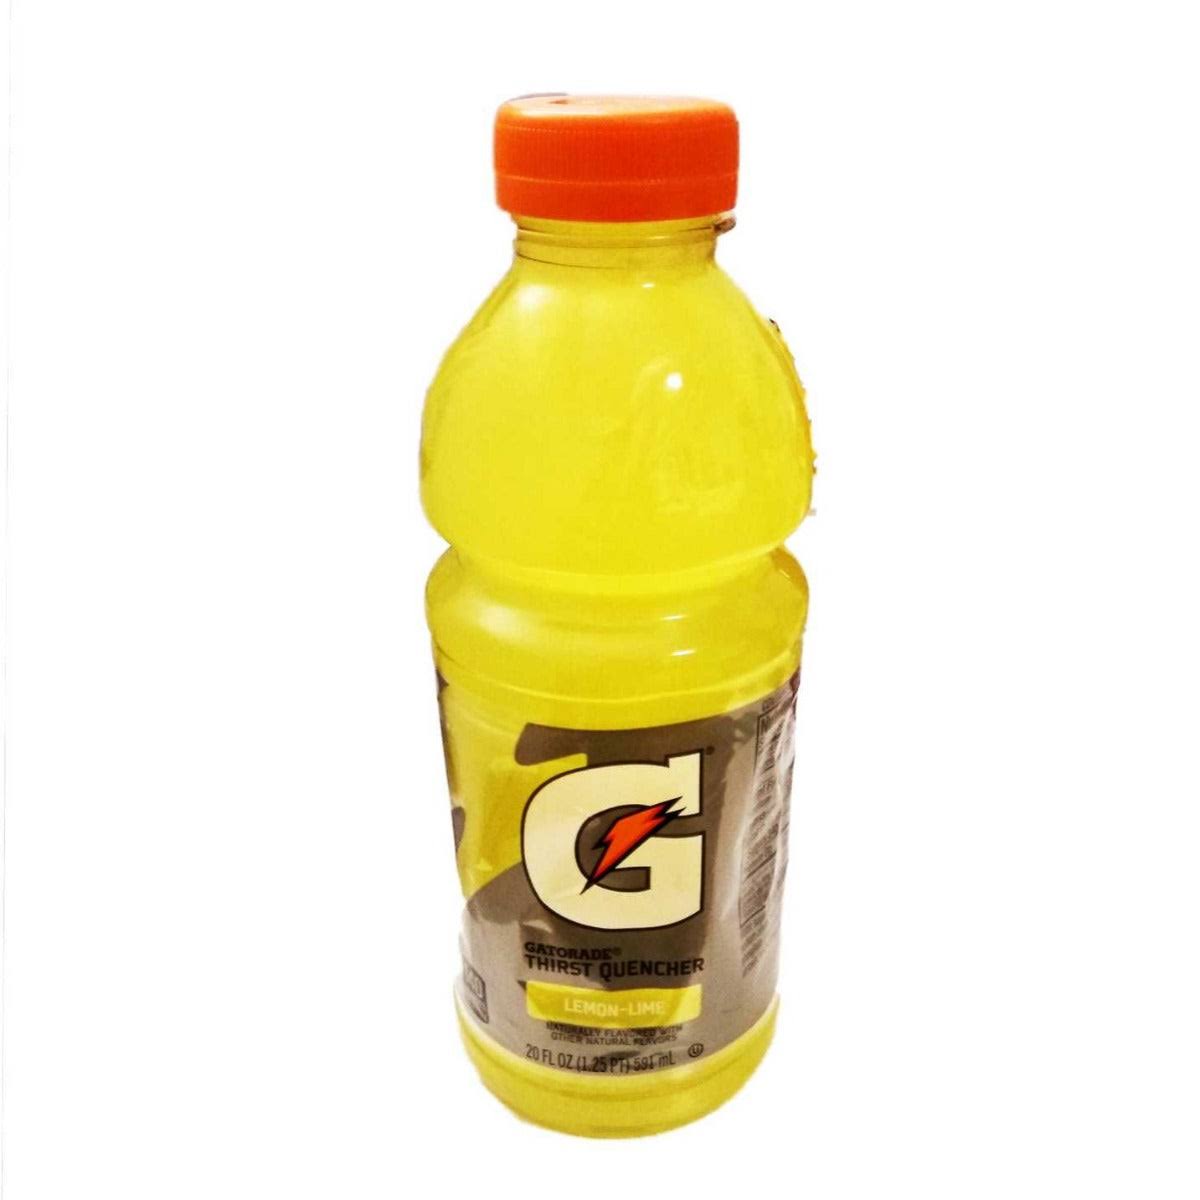 Gatorade Thirst Quencher, Lemon-Lime - 12 fl oz